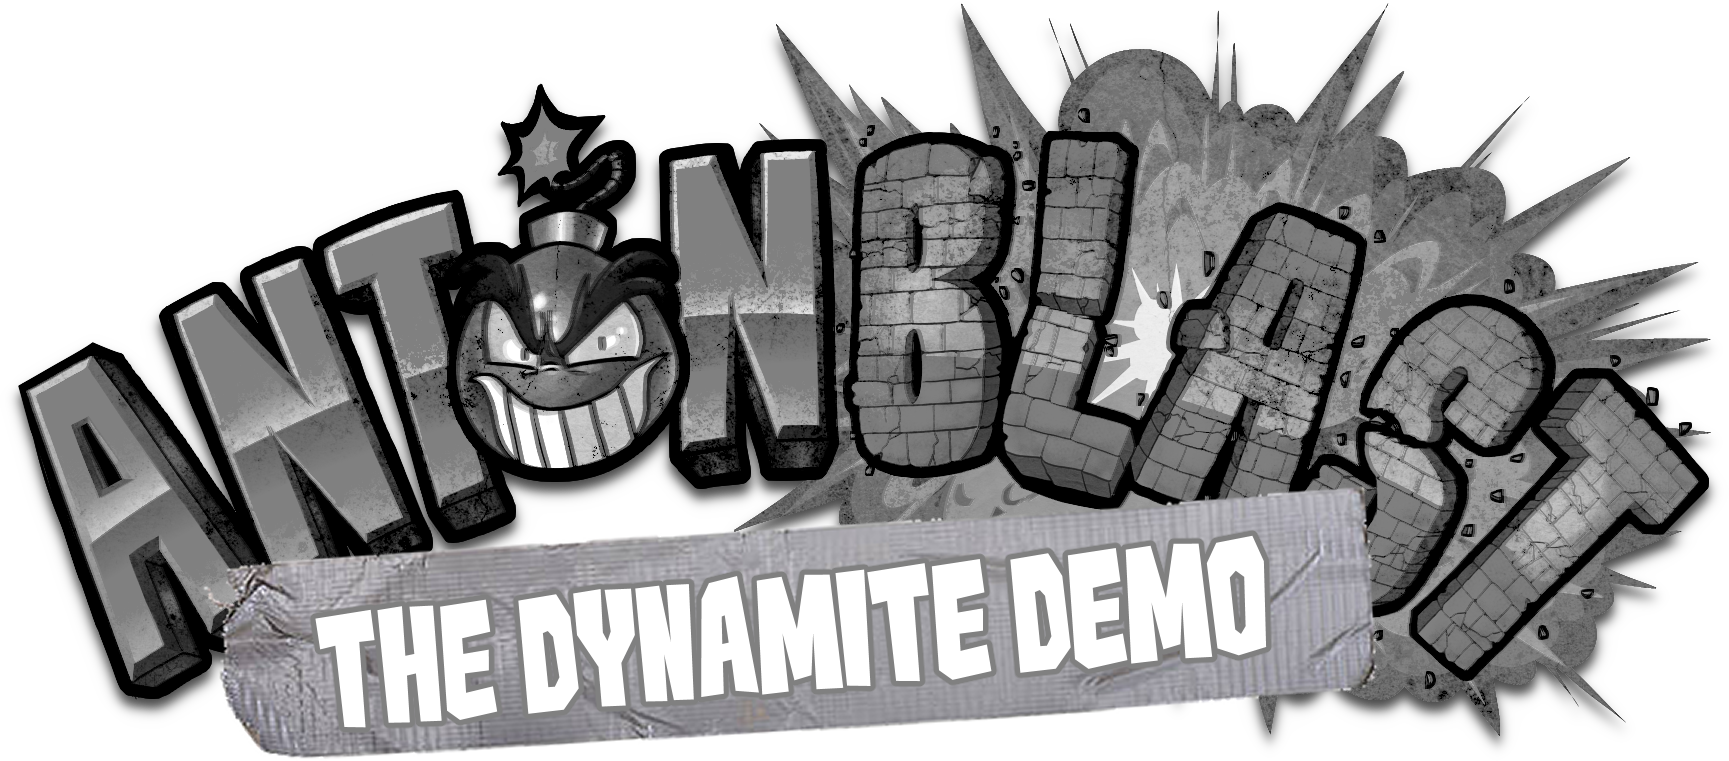 ANTONBLAST: The Dynamite Demo!